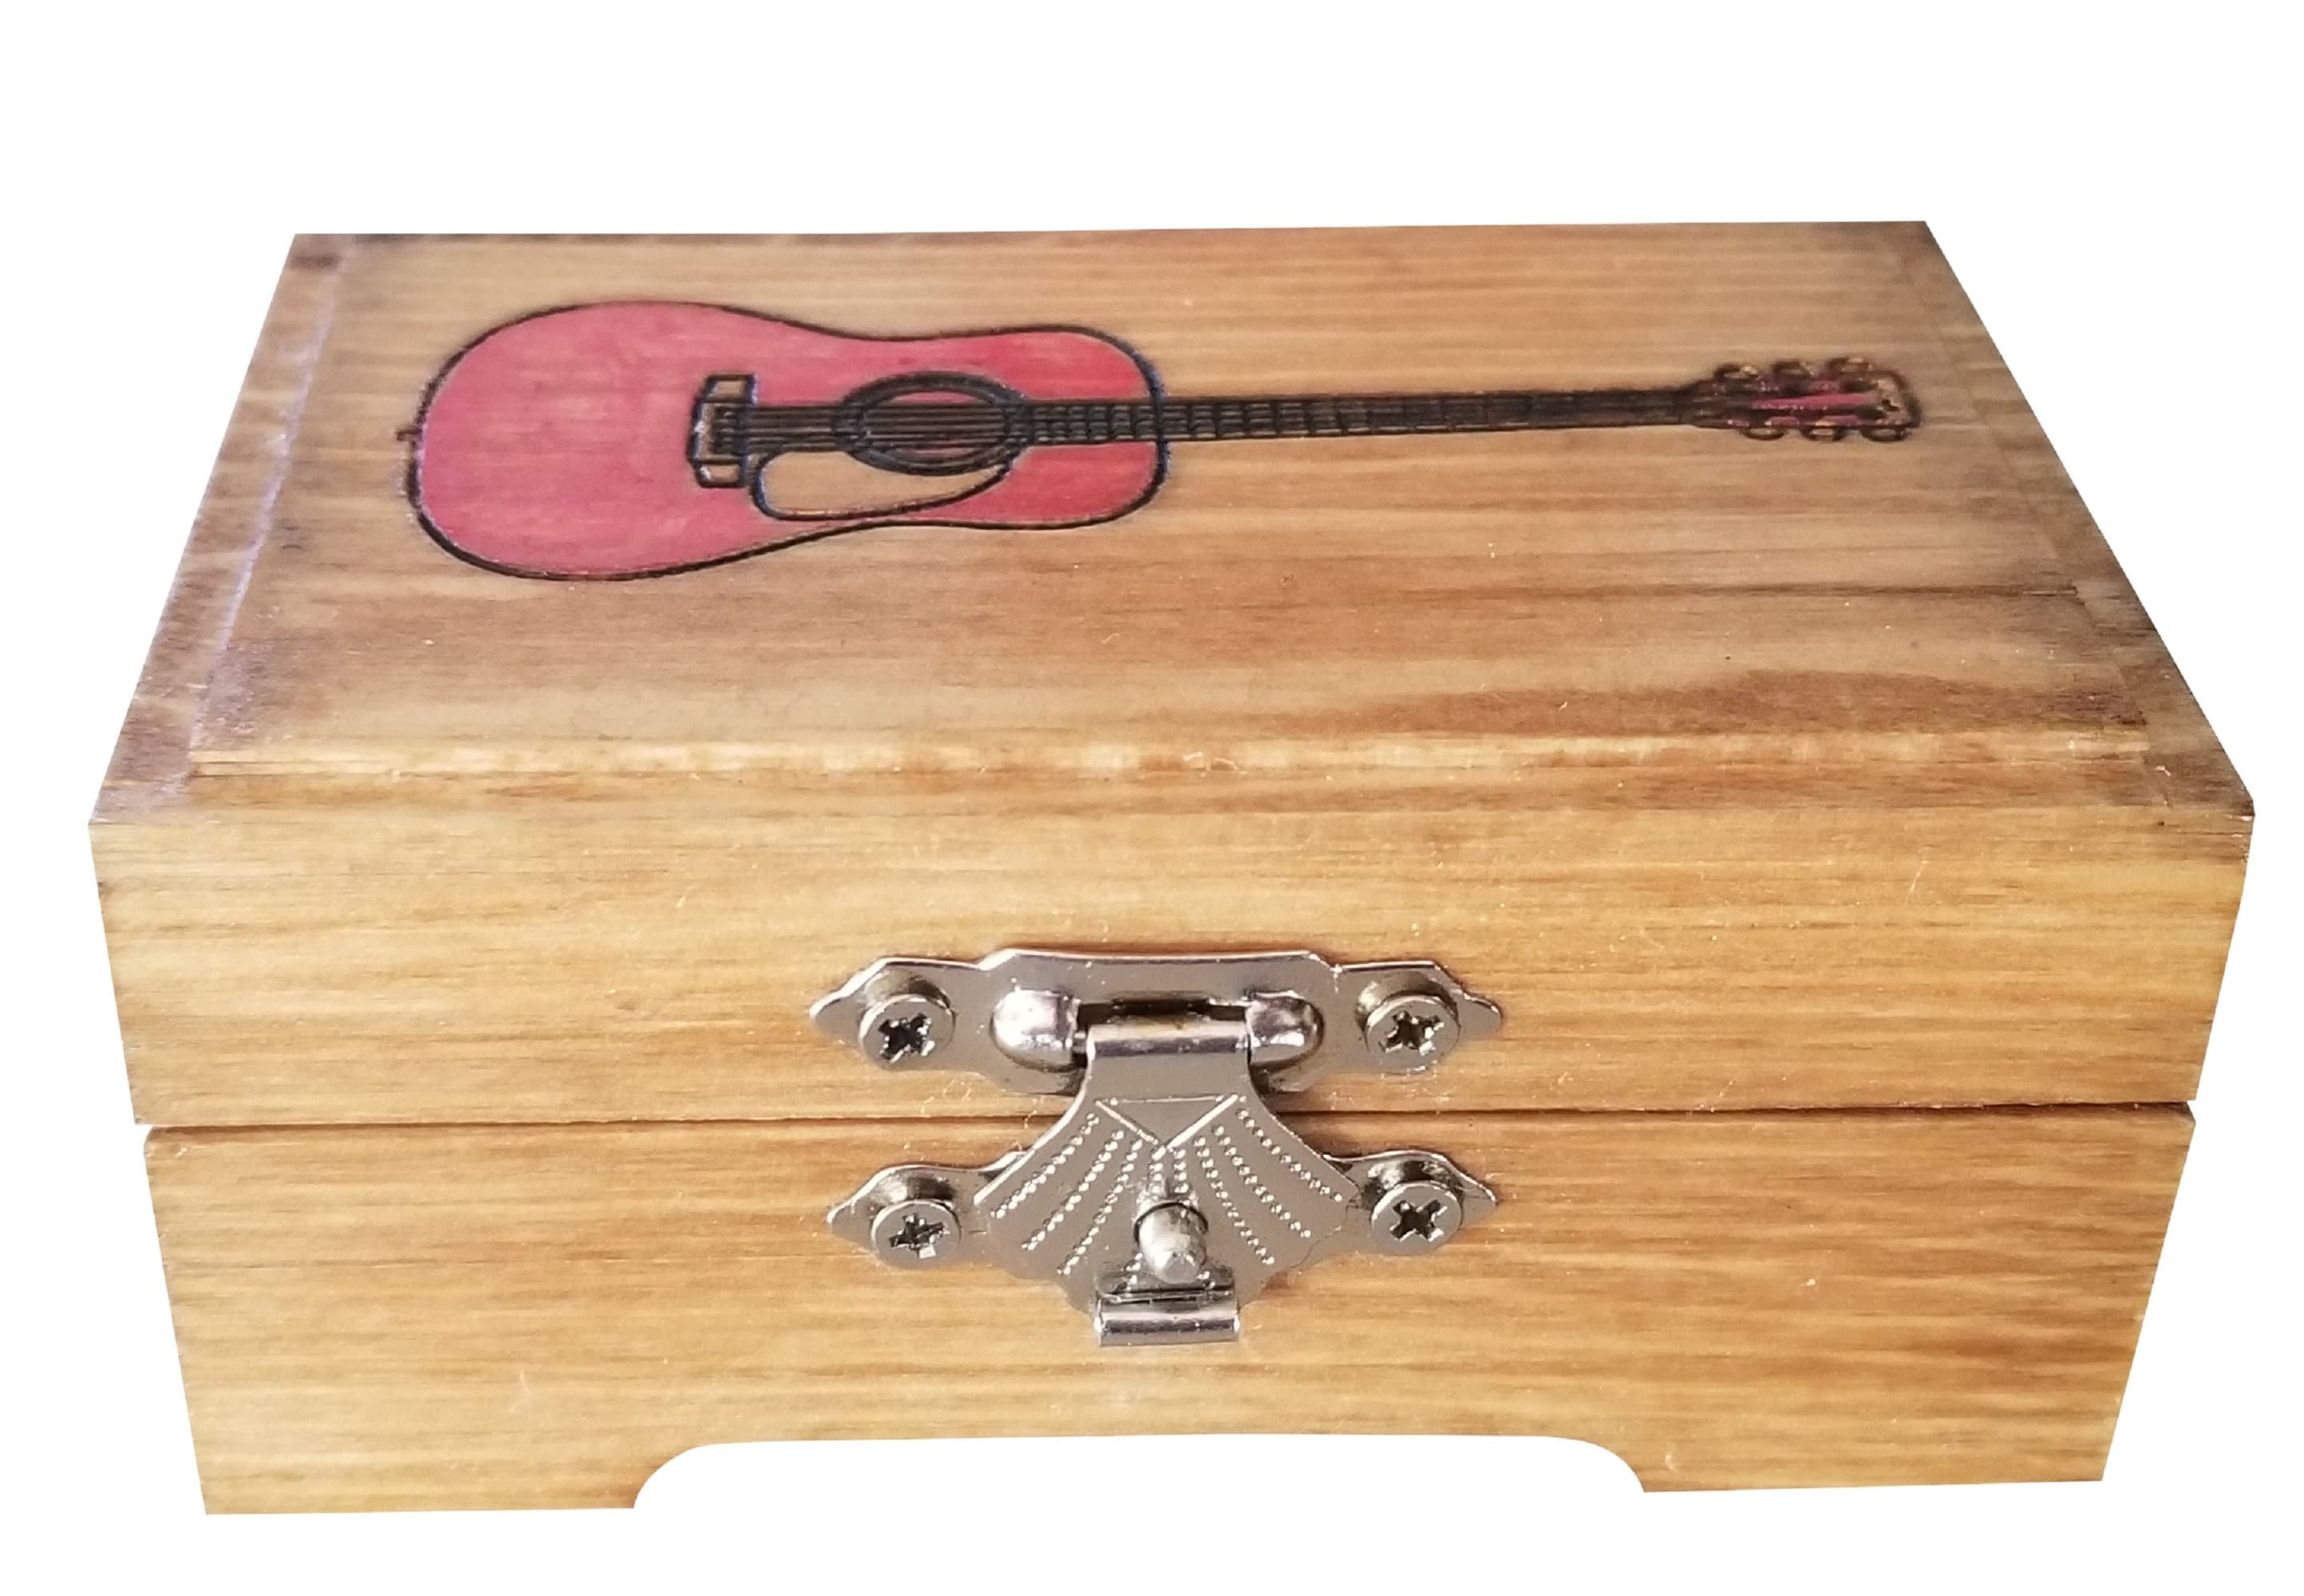 MUPOO Guitar Picks Holder Wooden Square Box for Picks Storage 